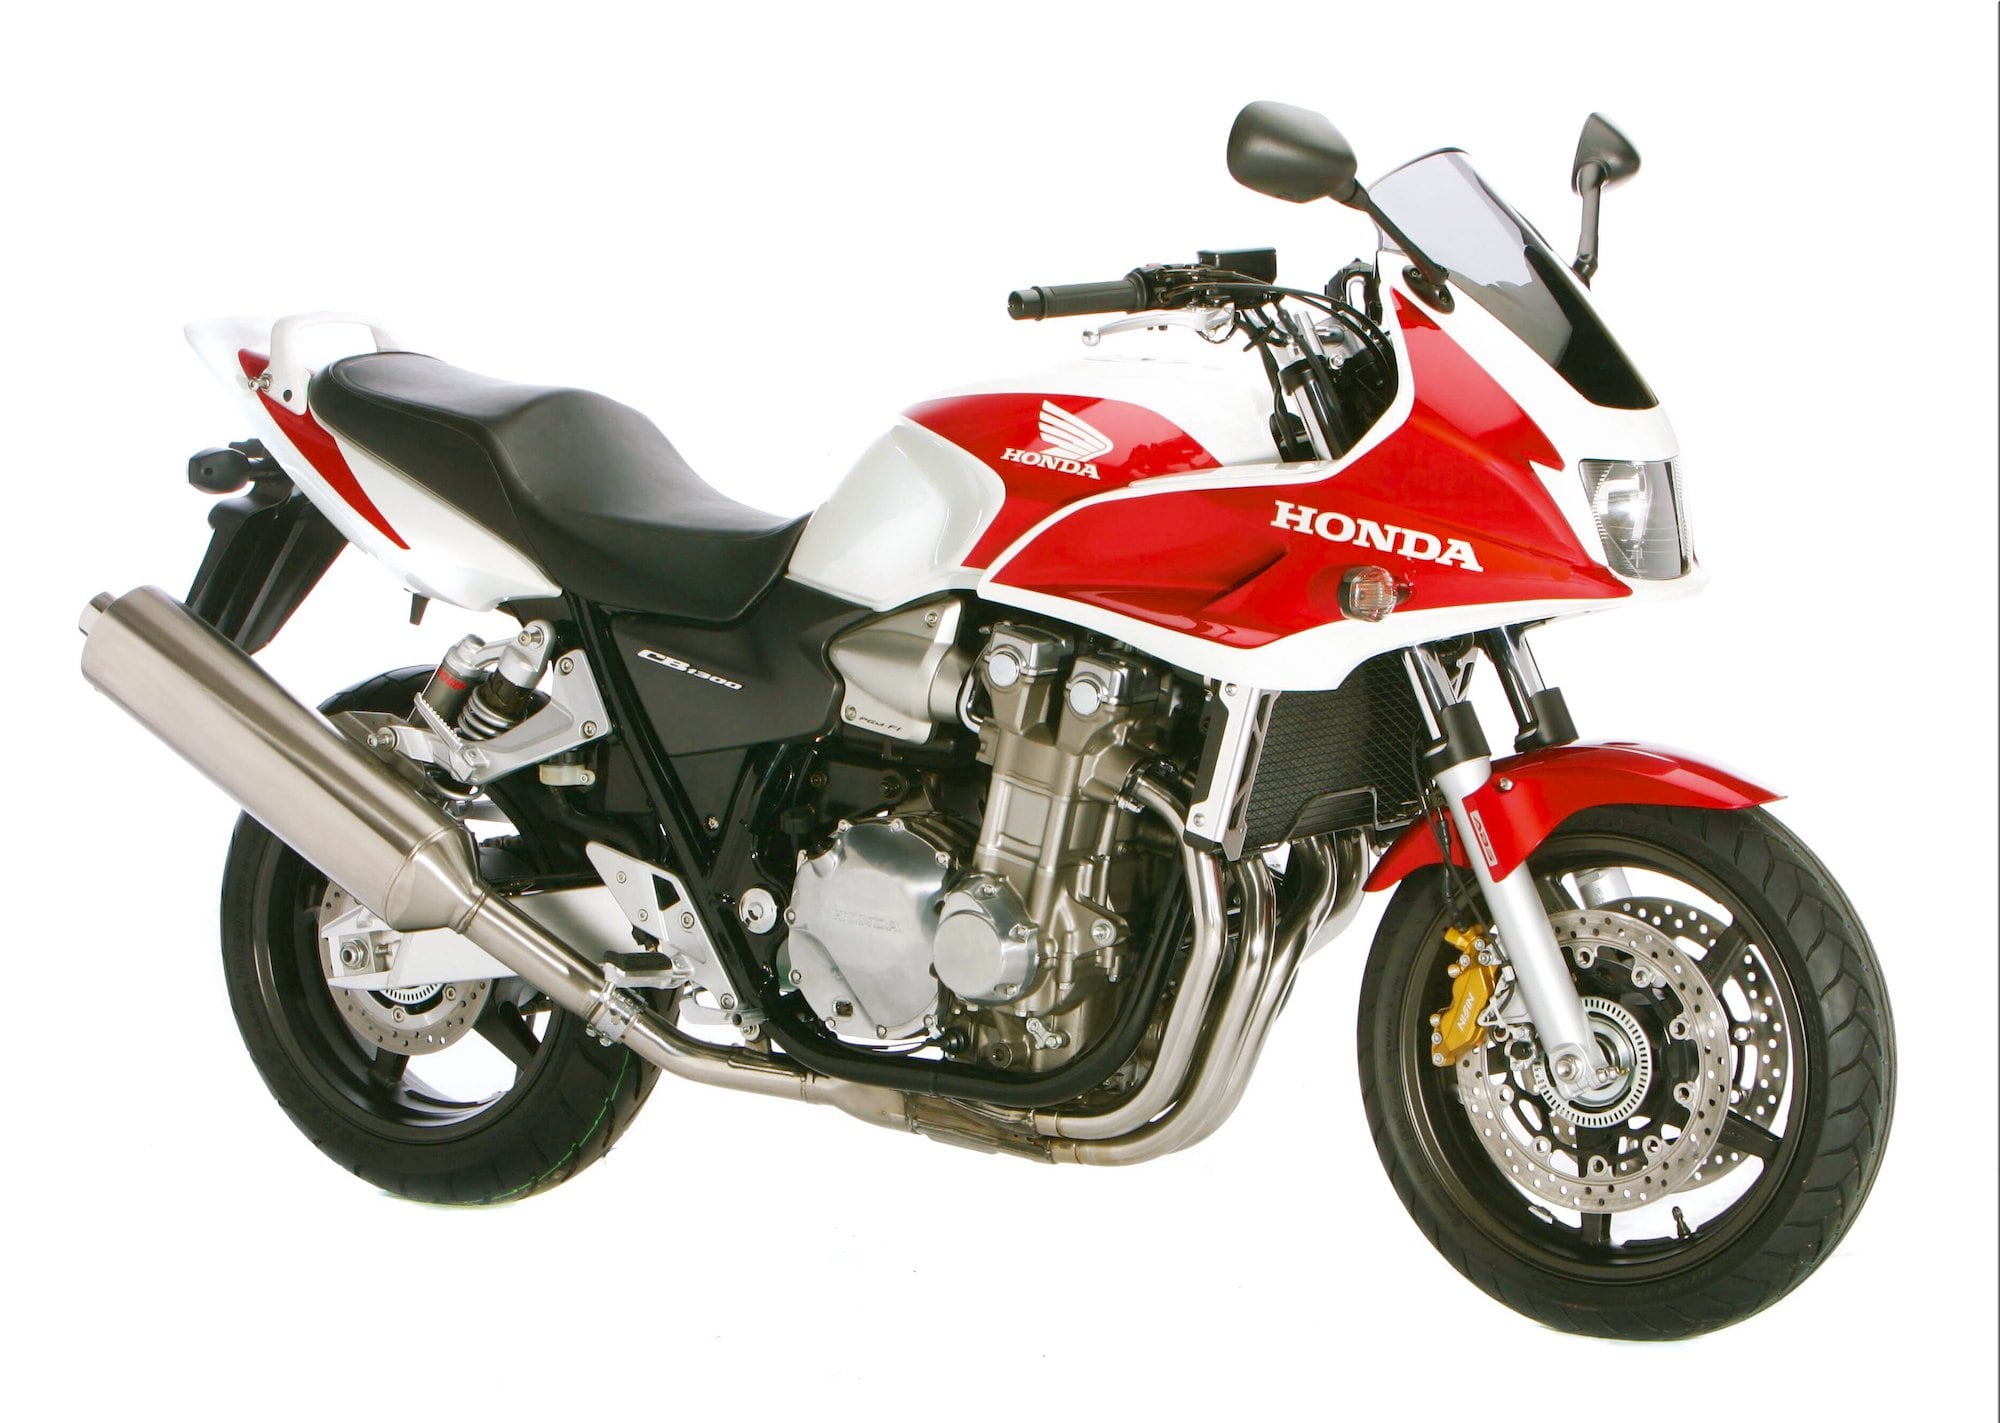 2006 Red and white Honda CB1300S RHS 3-4 studio